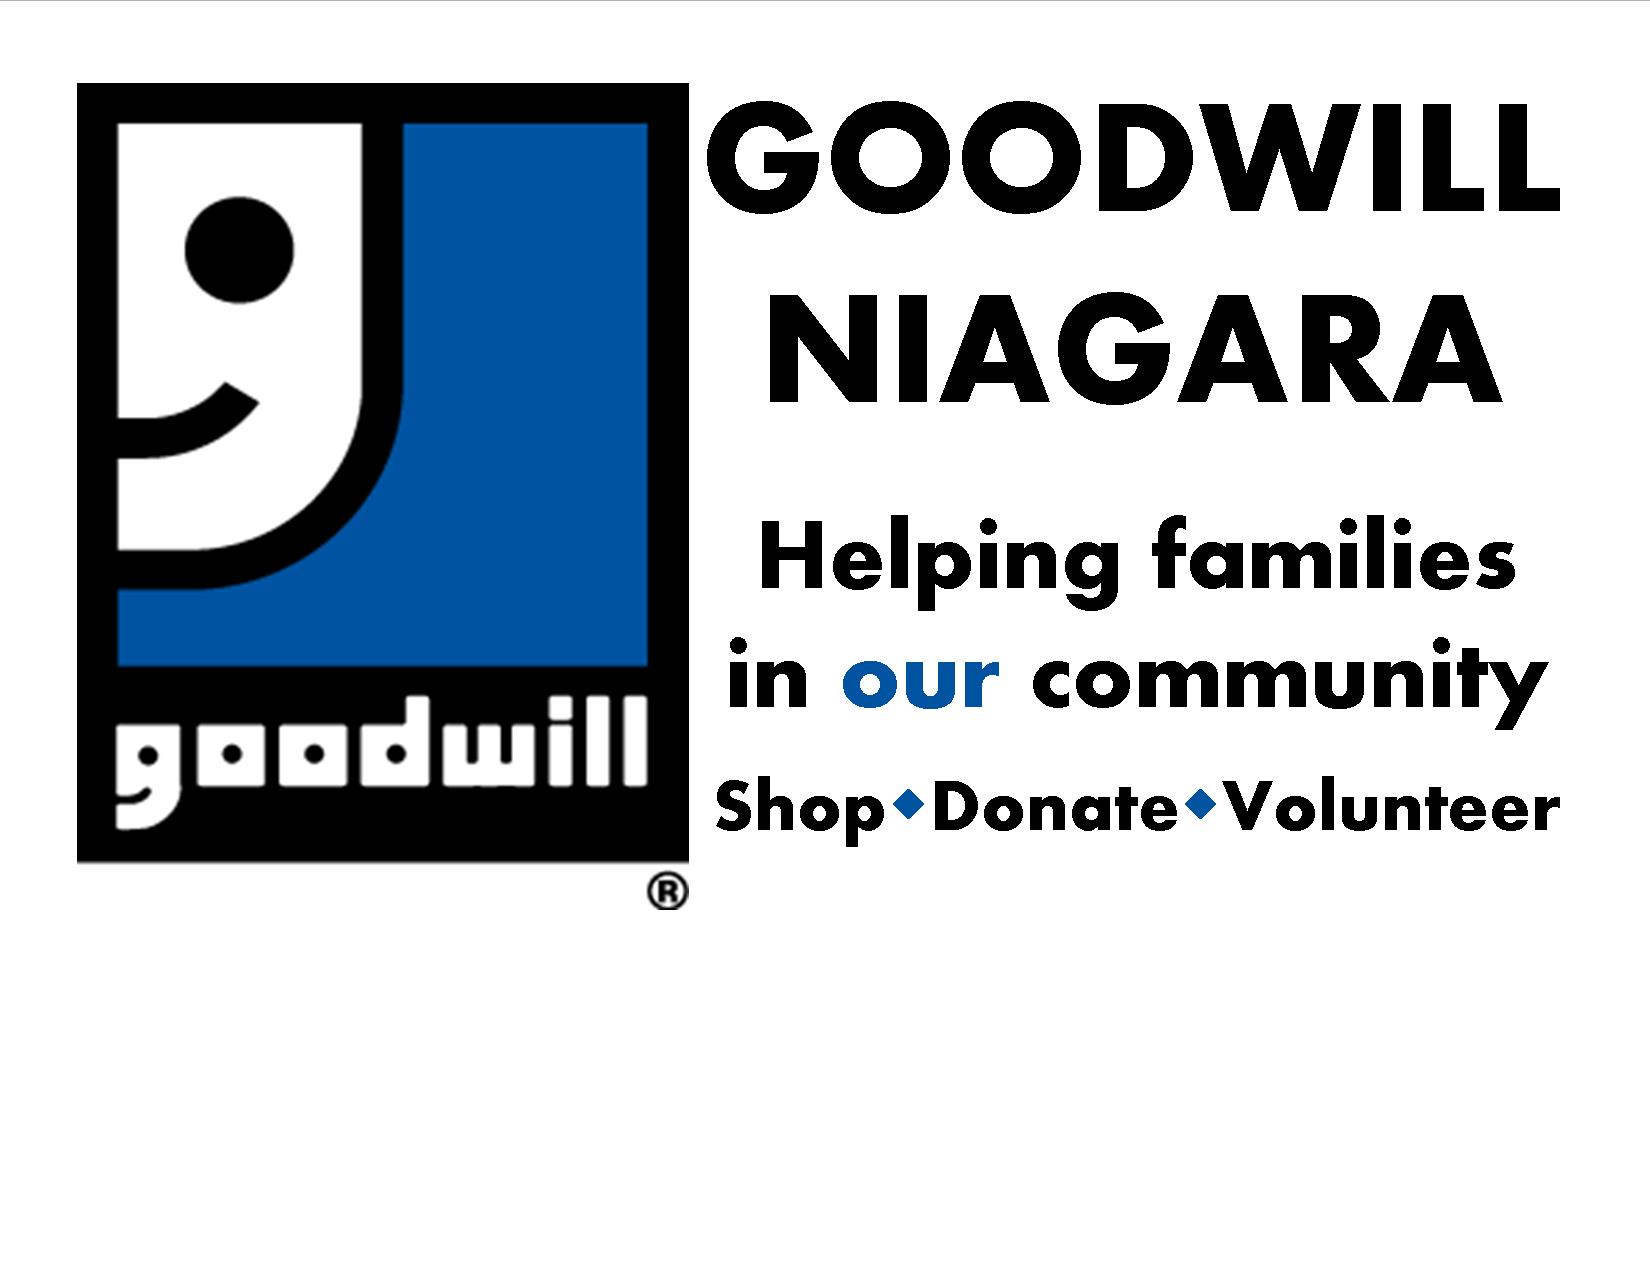 Goodwill Niagara